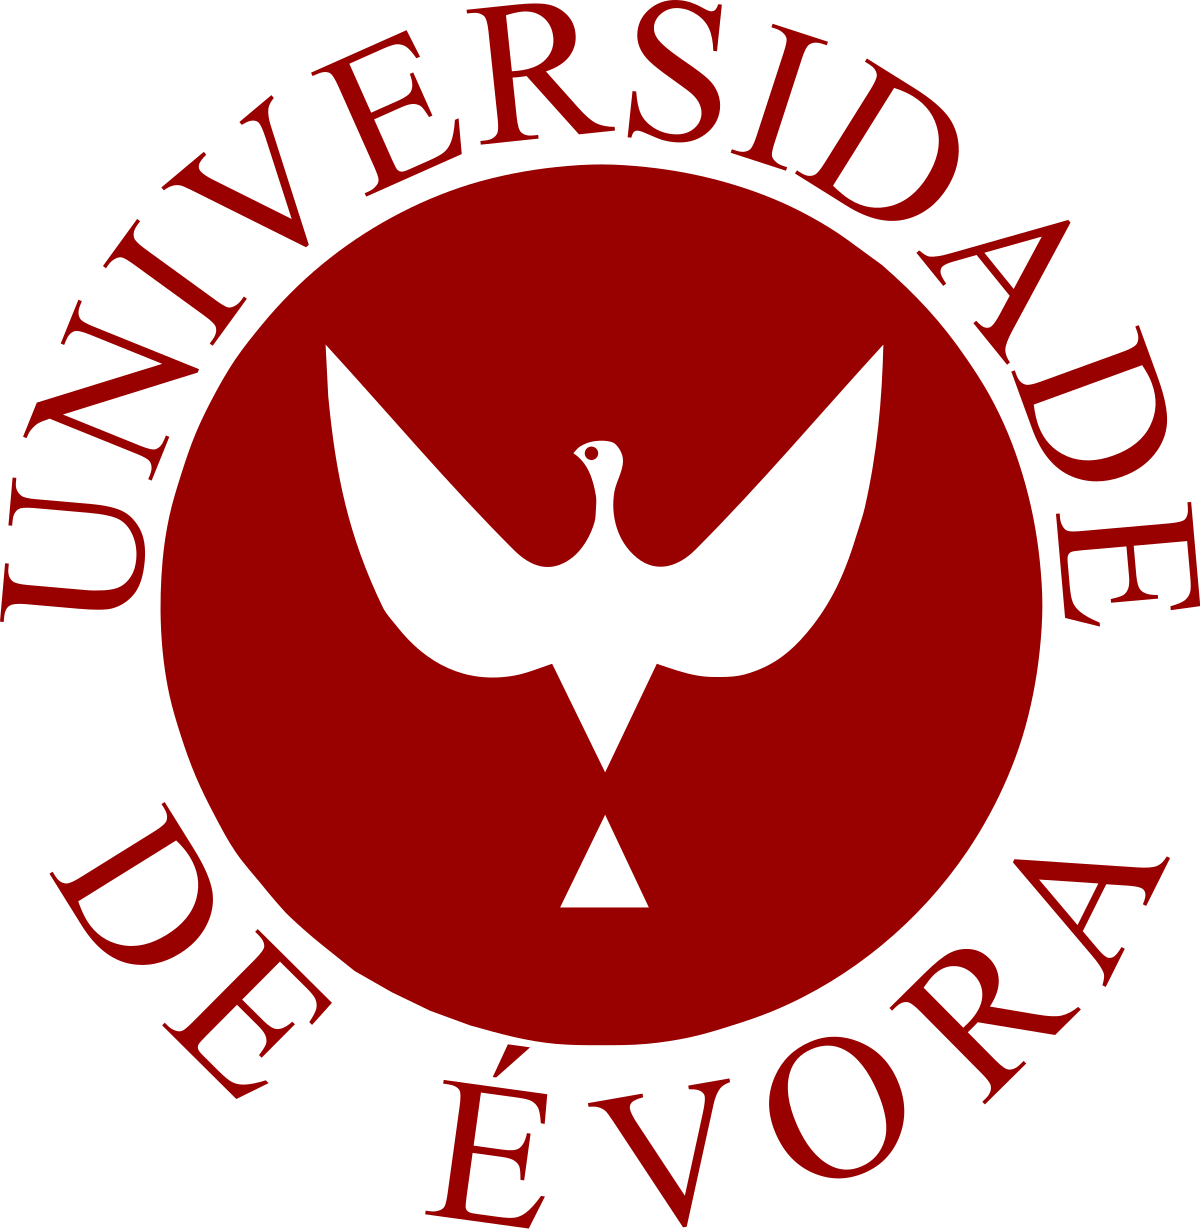 Evora University